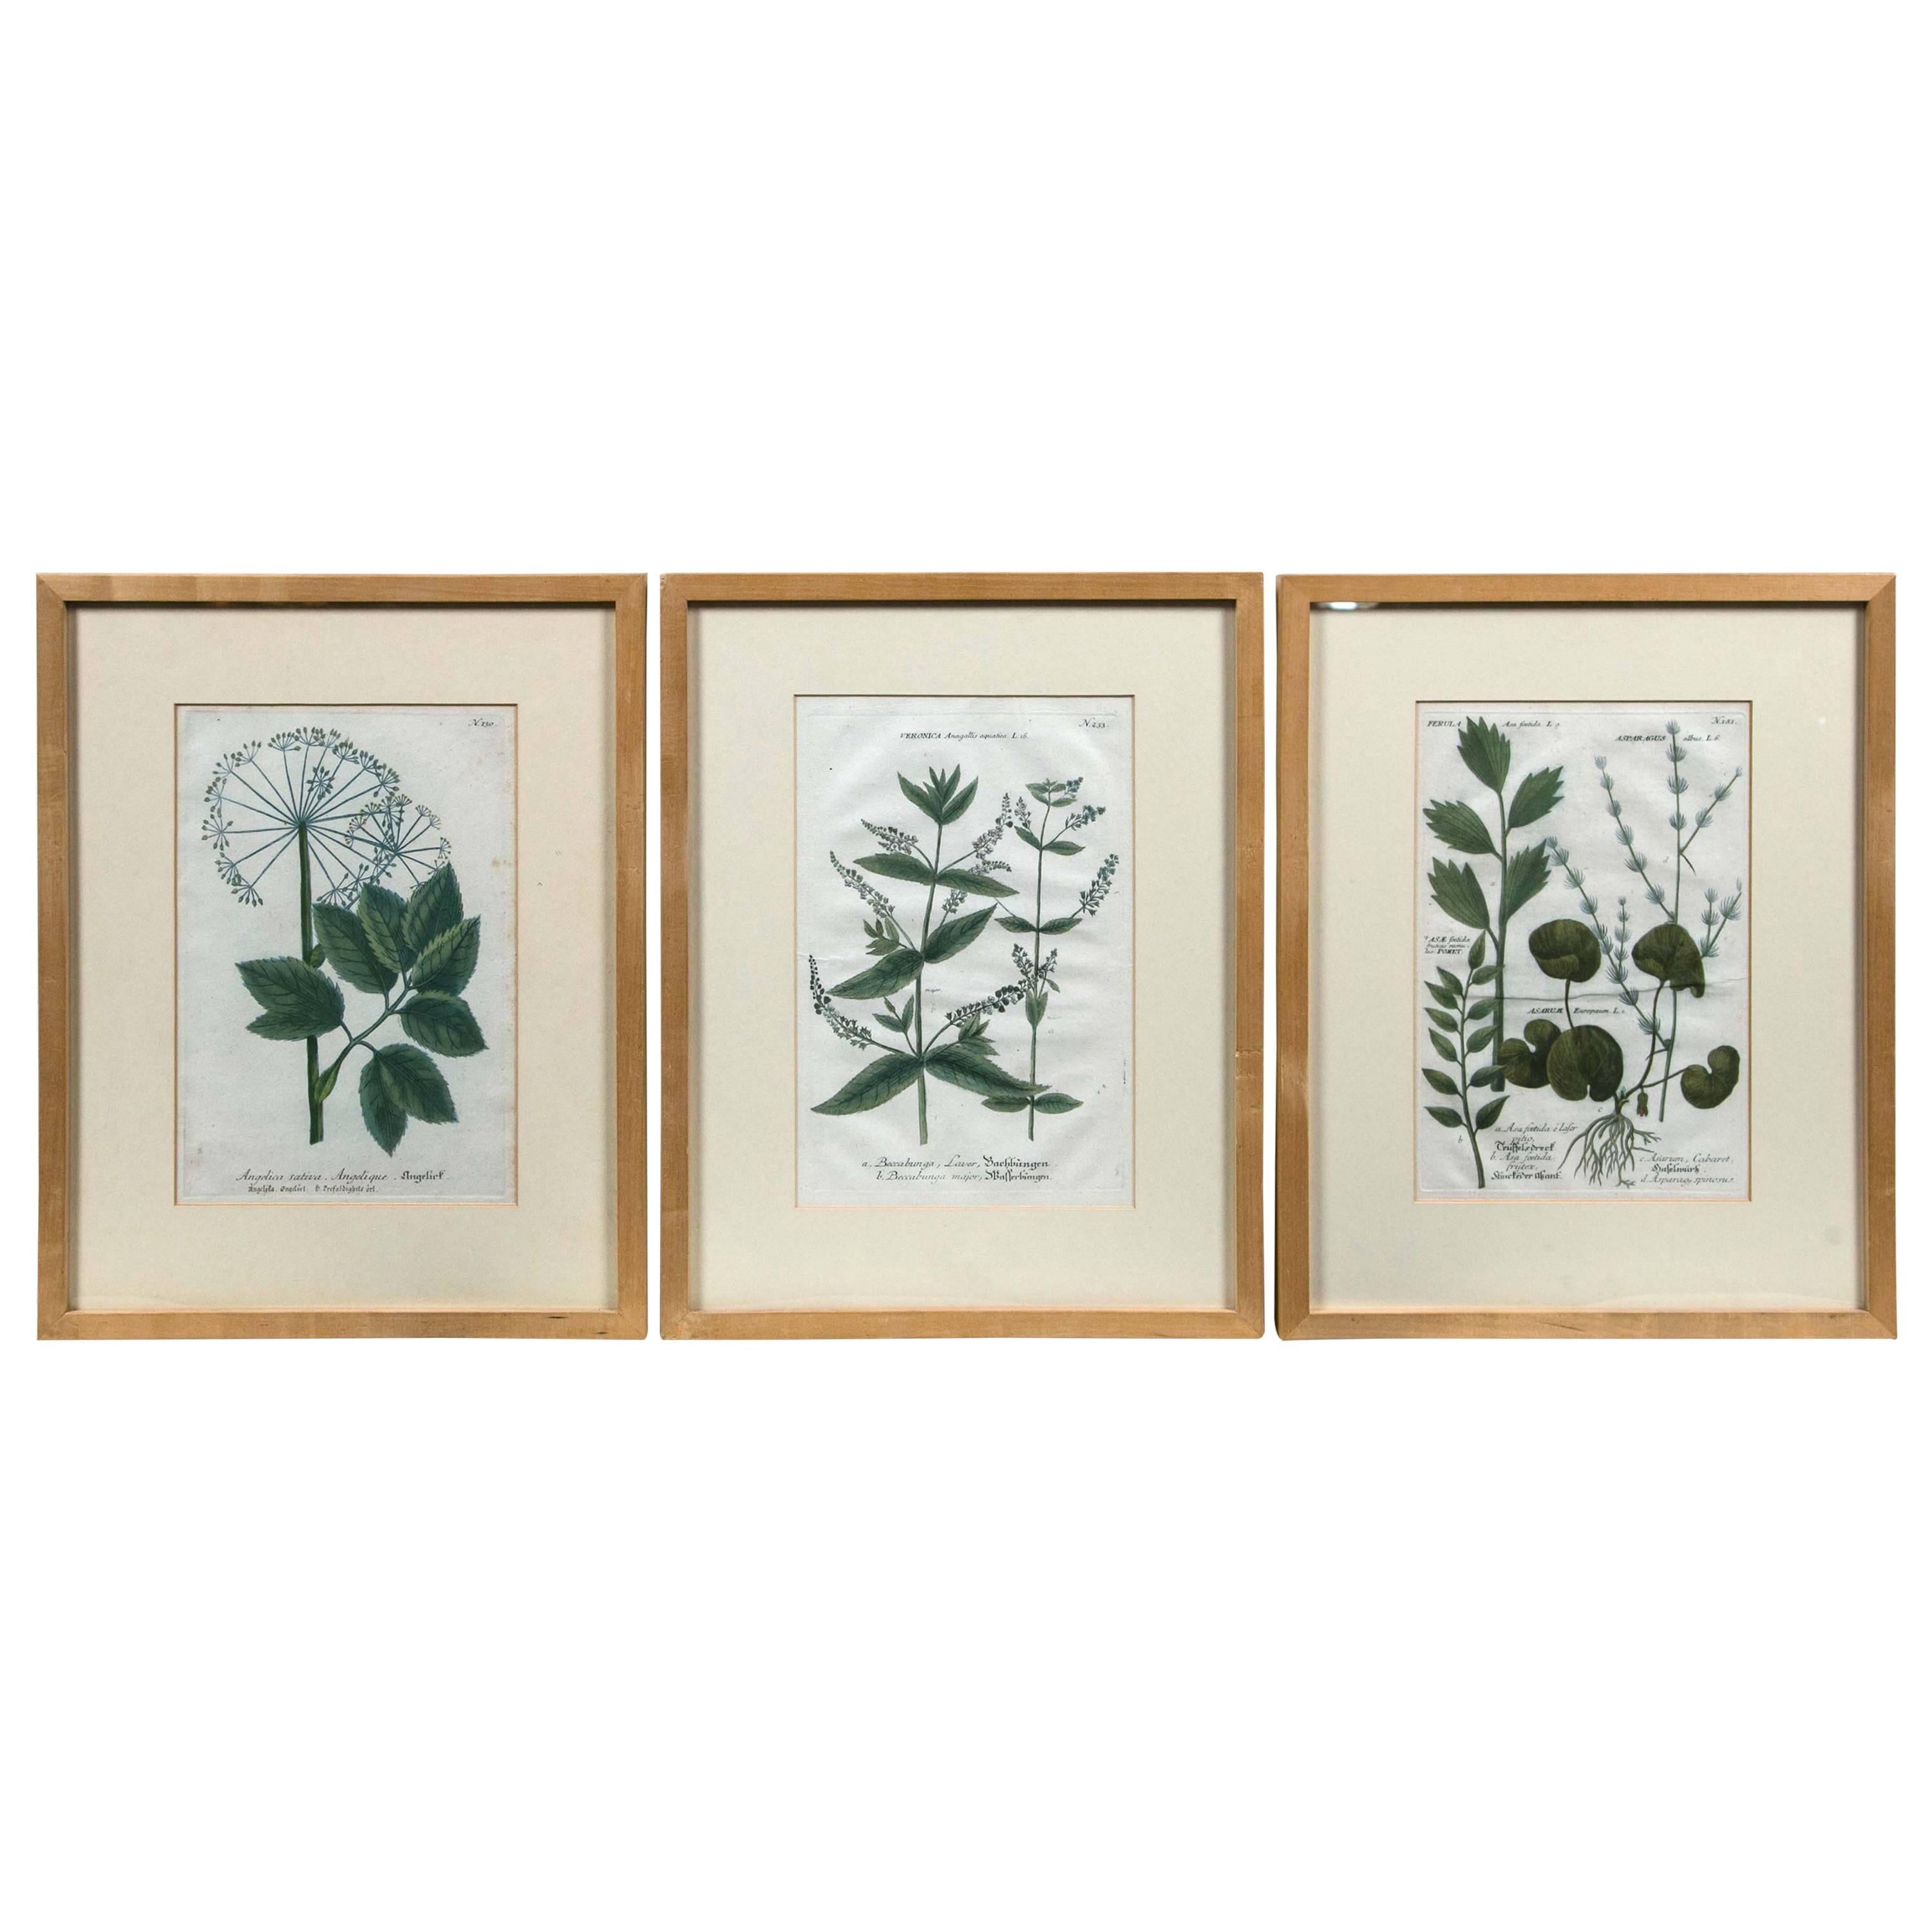 Set of Three Hand-Colored Botanical Prints, Late 18th Century